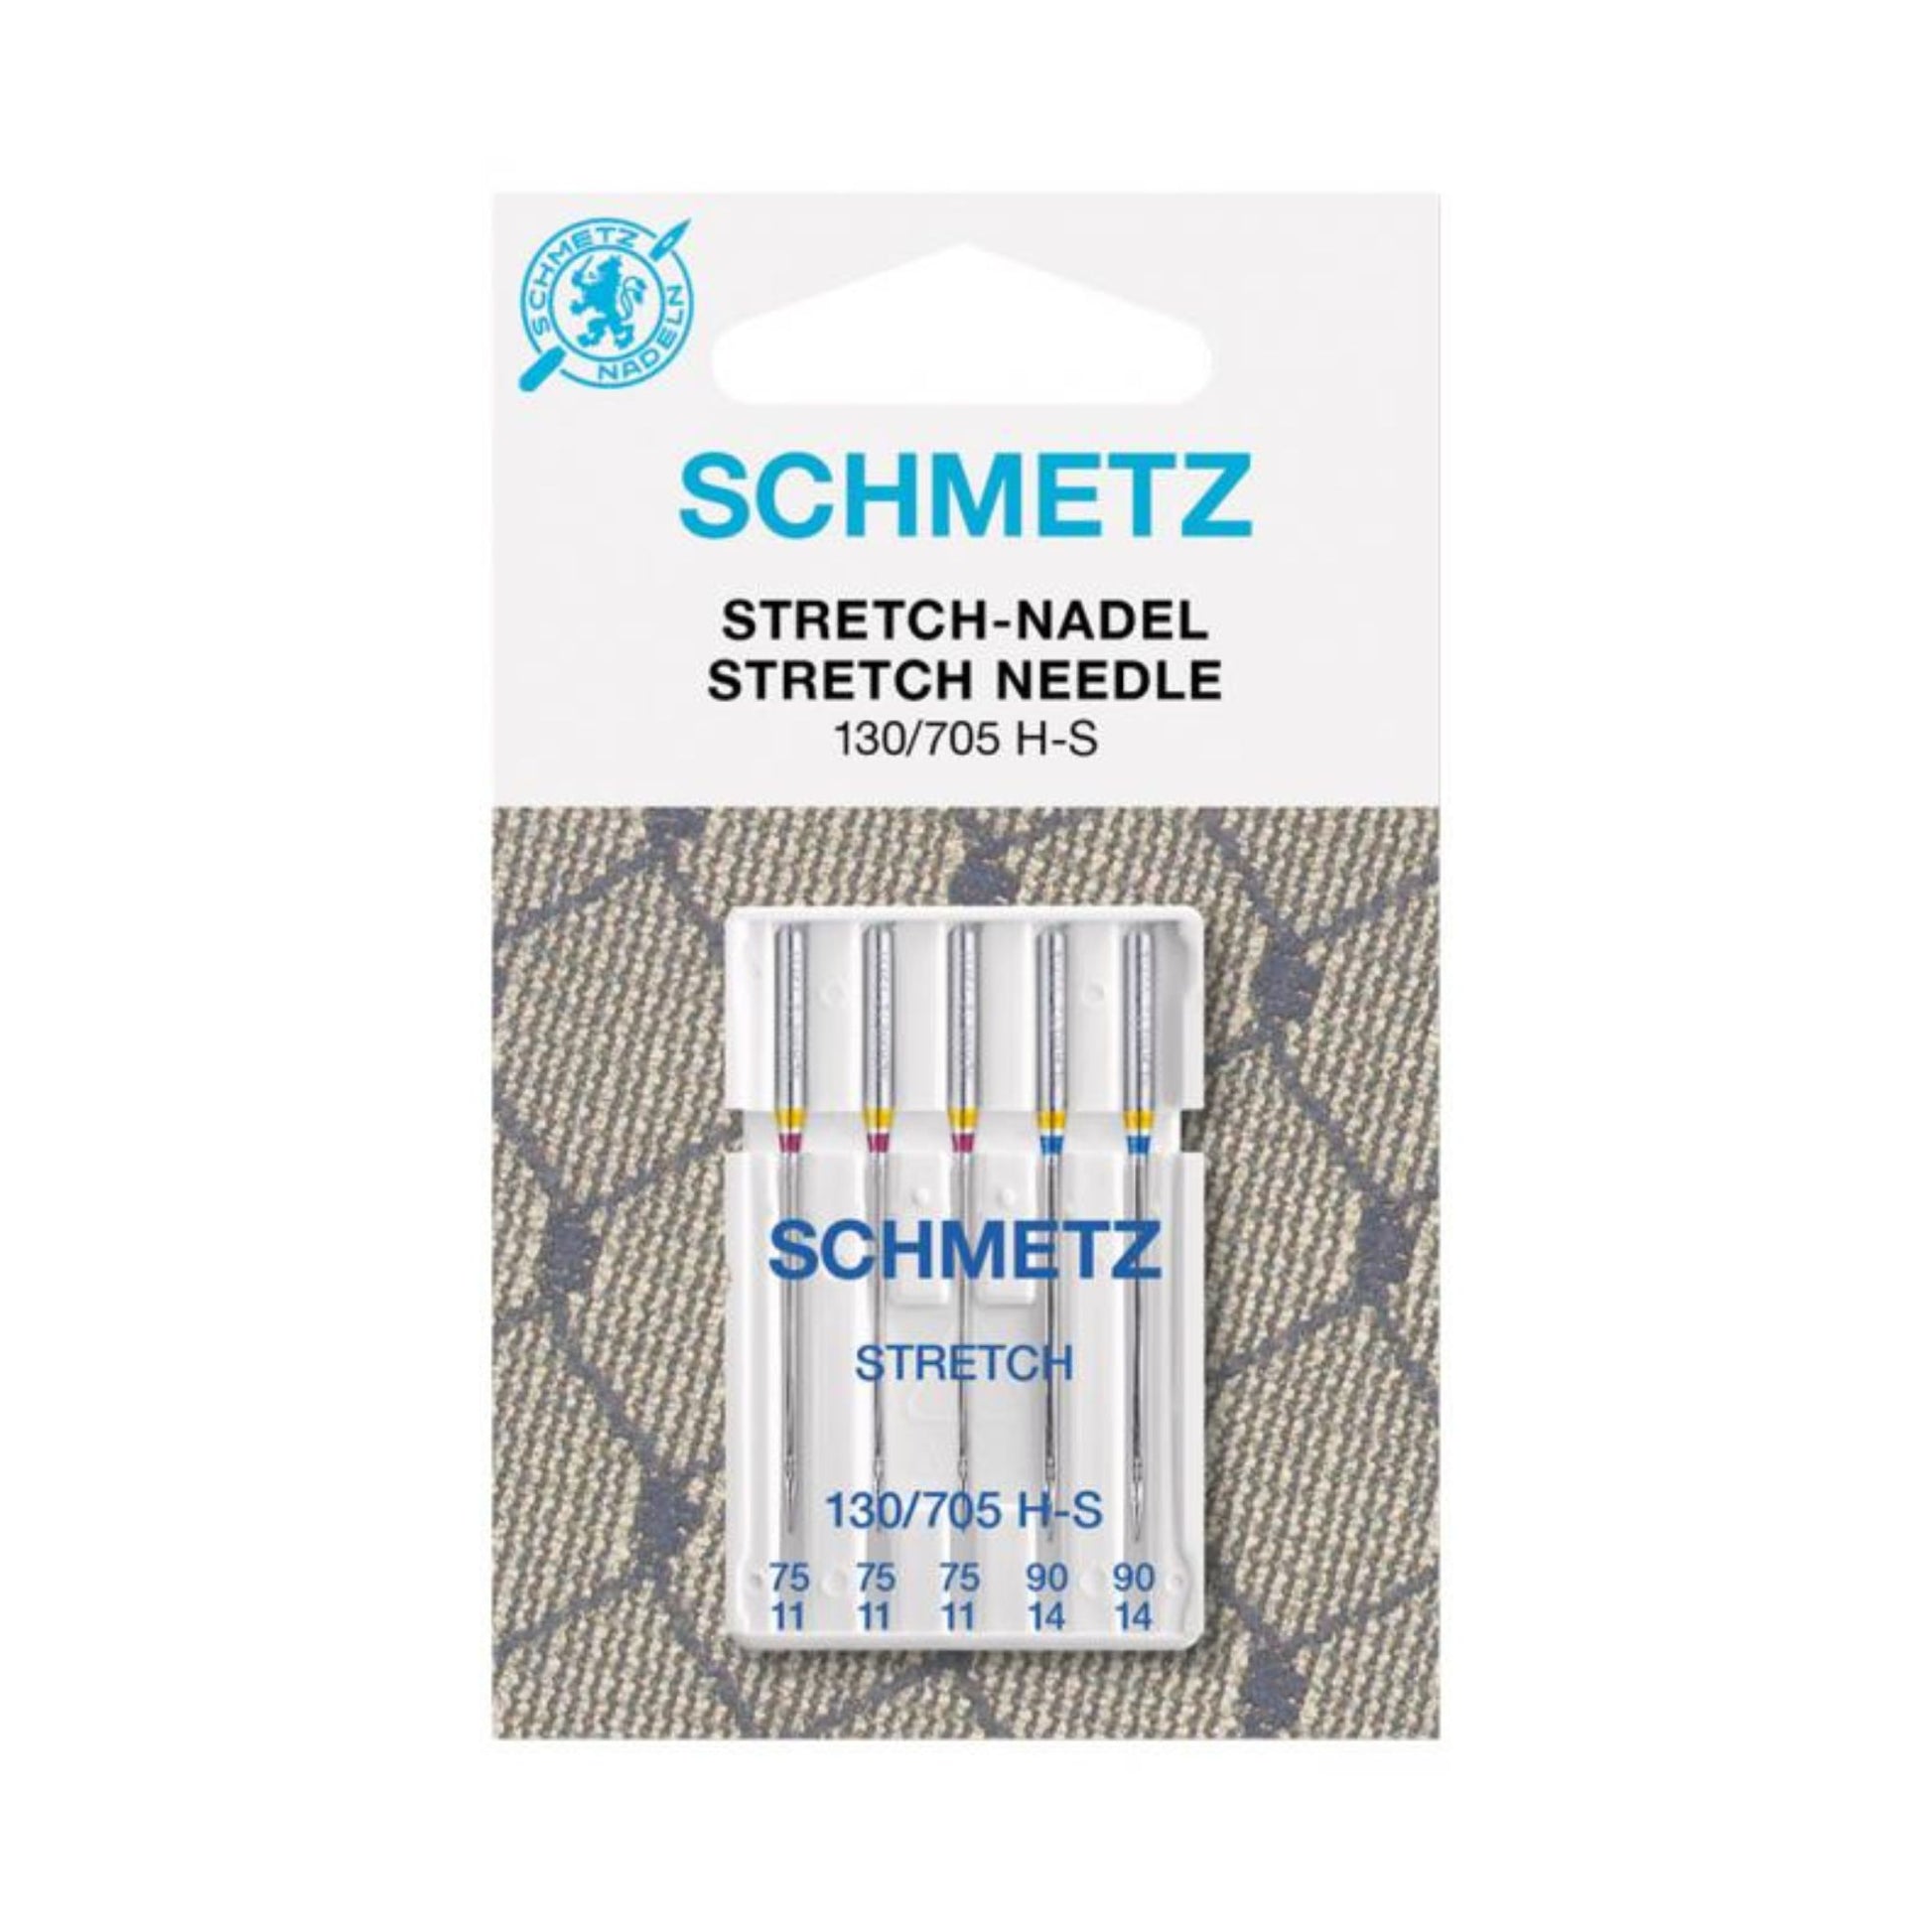 Schmetz Stretch-Nadel 